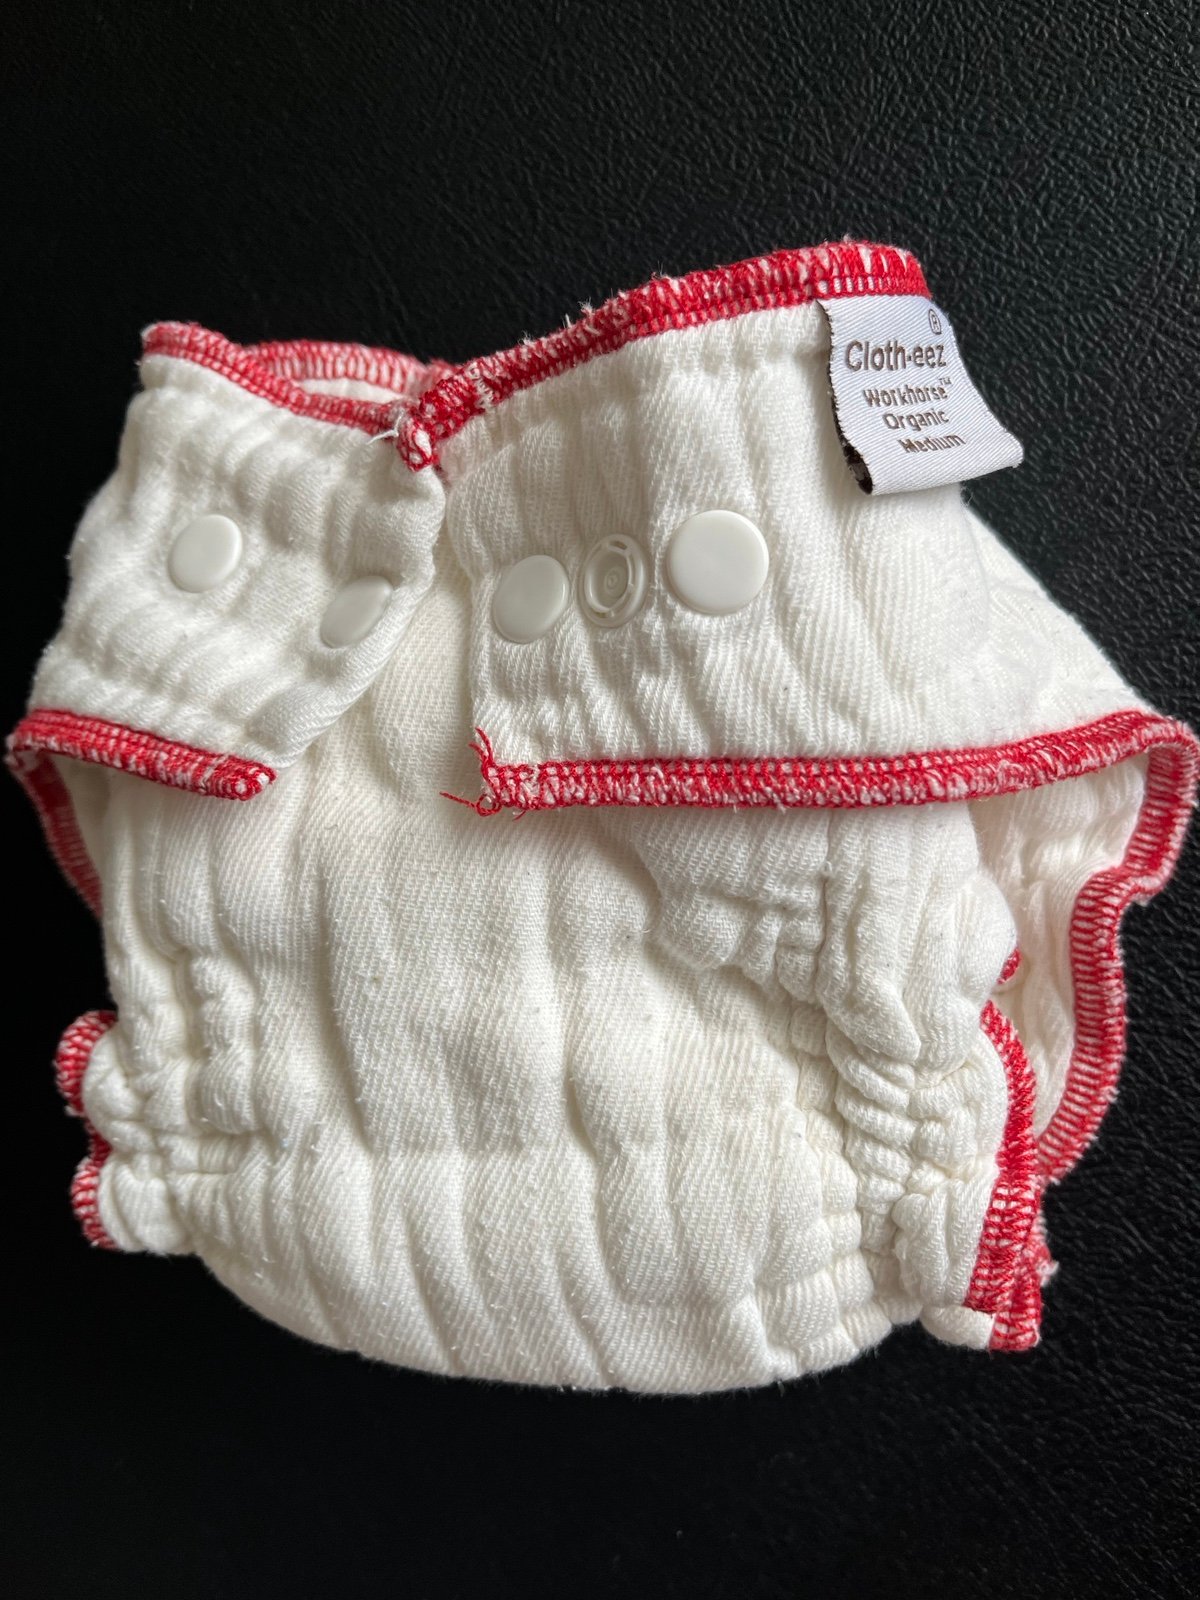 Cloth-Eez Diaper size Medium c2daWgBmZ